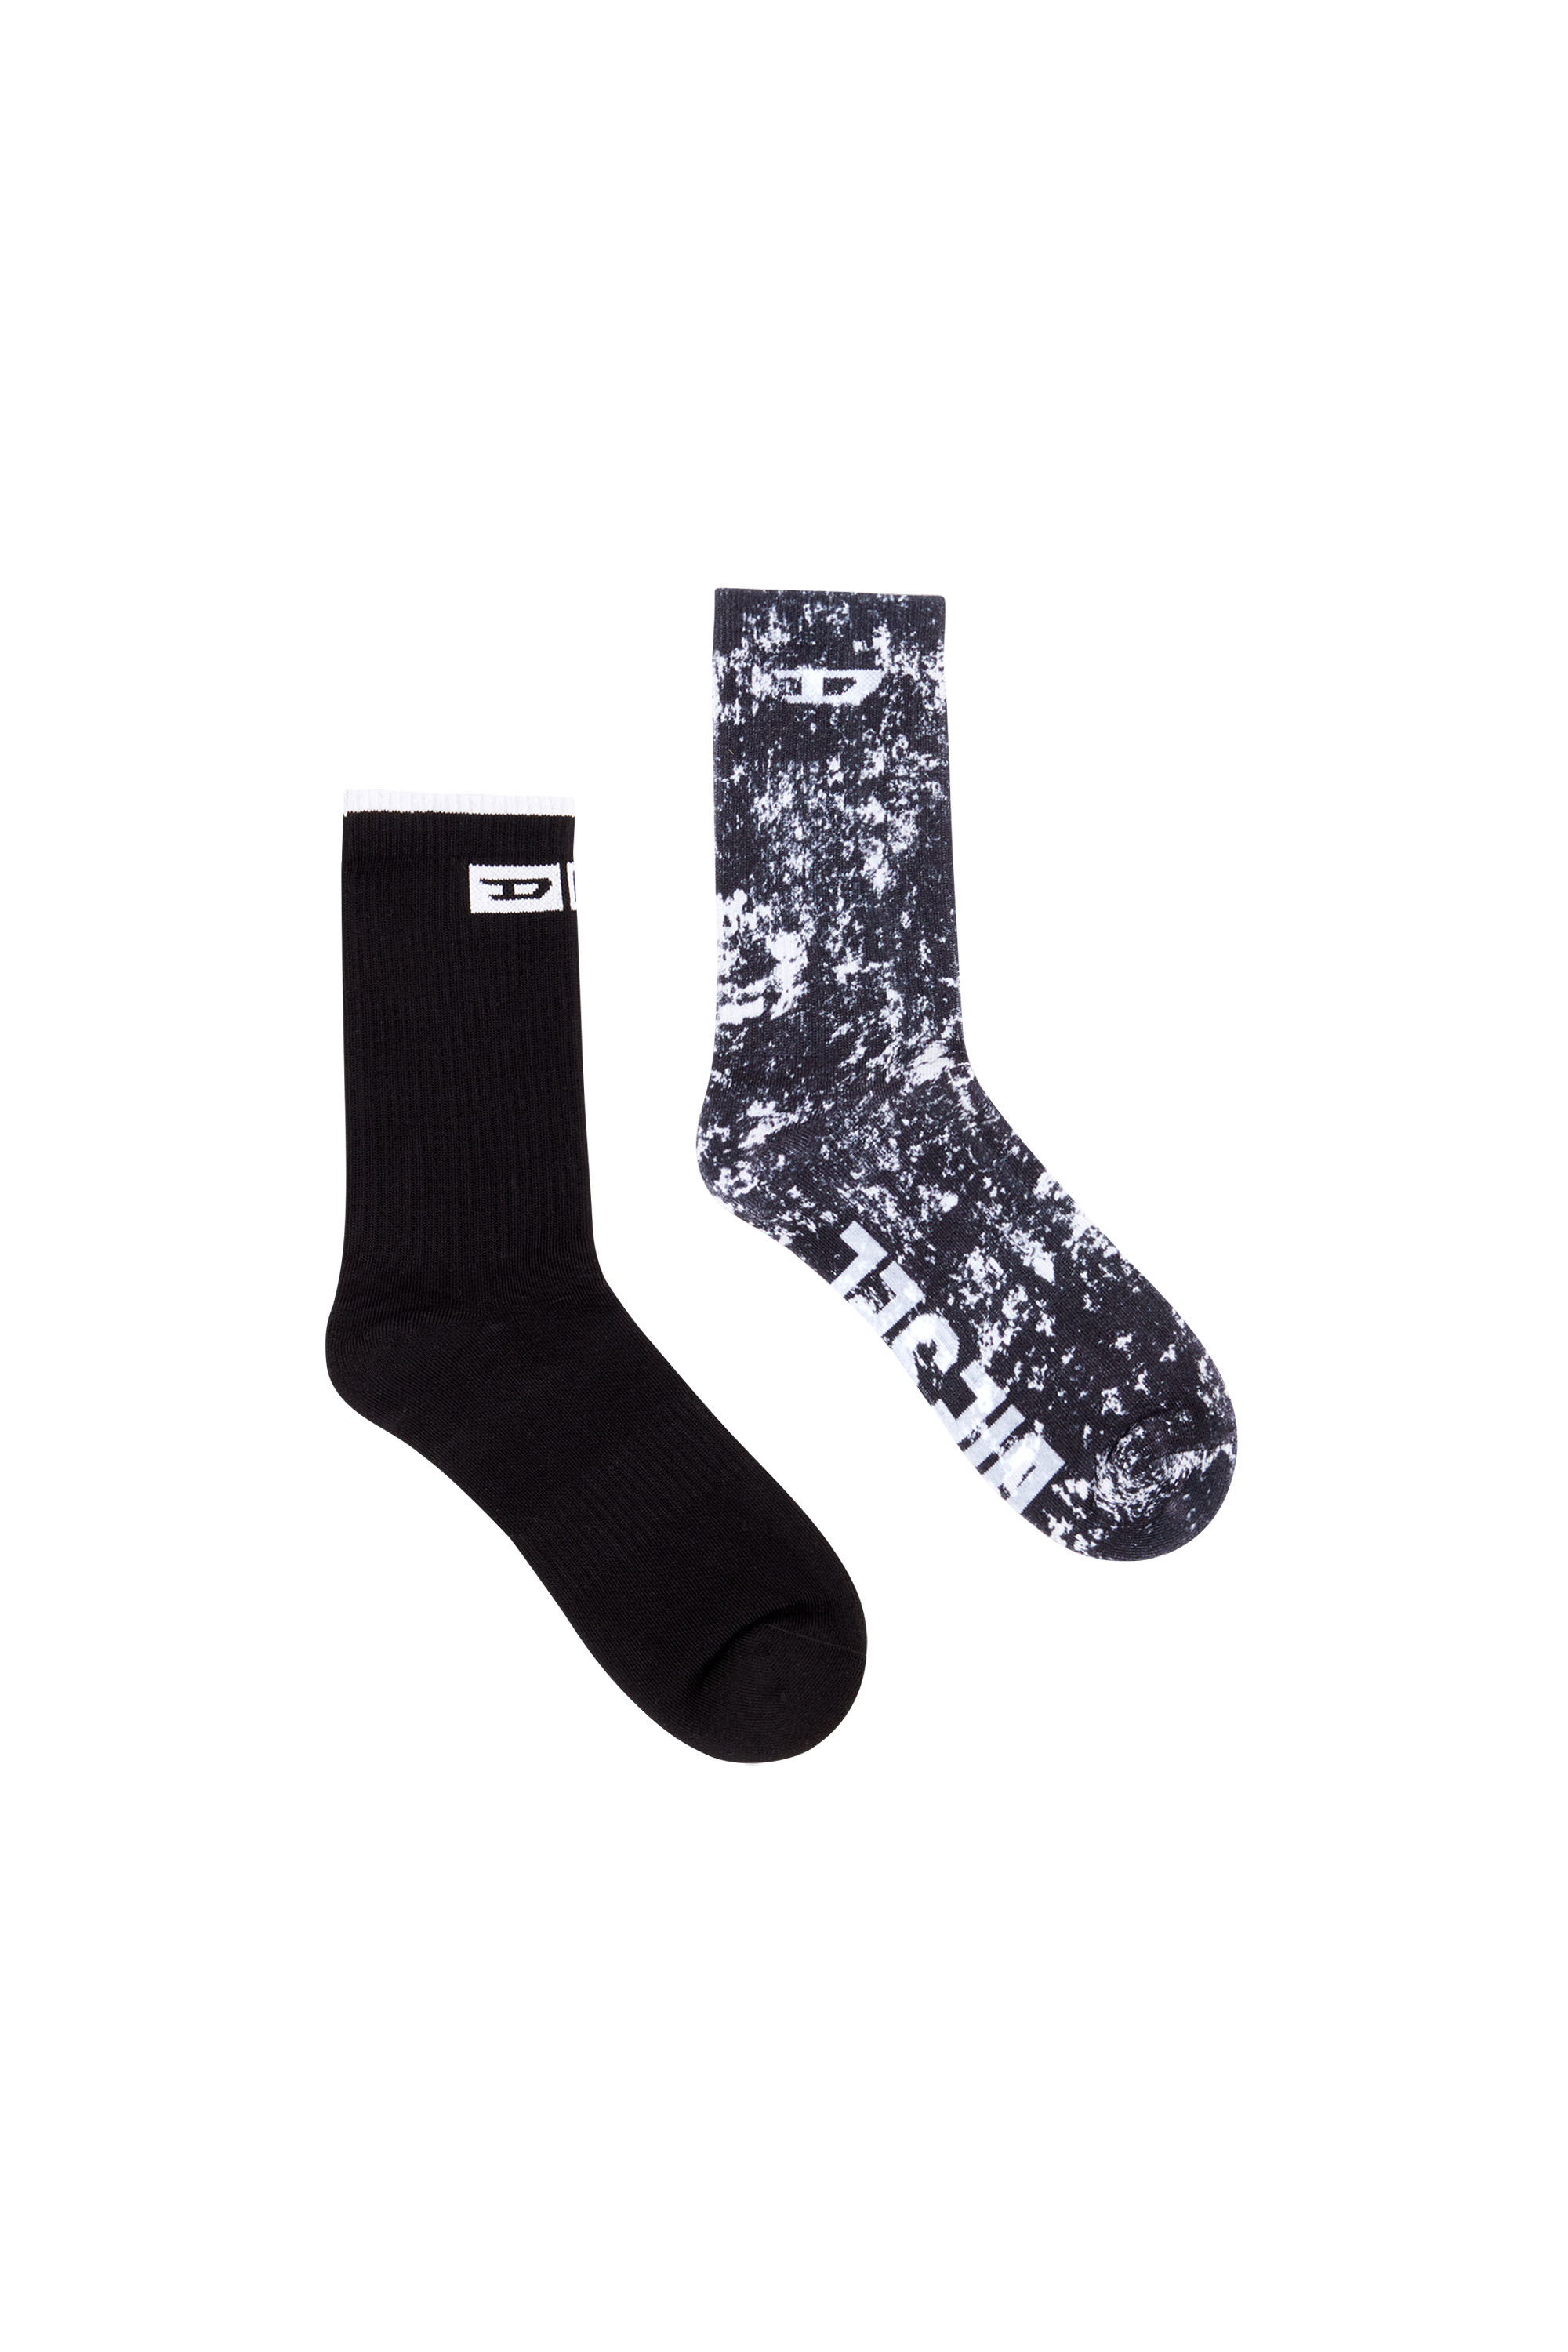 SKM-RAY-TWOPACK, Black/Grey - Socks